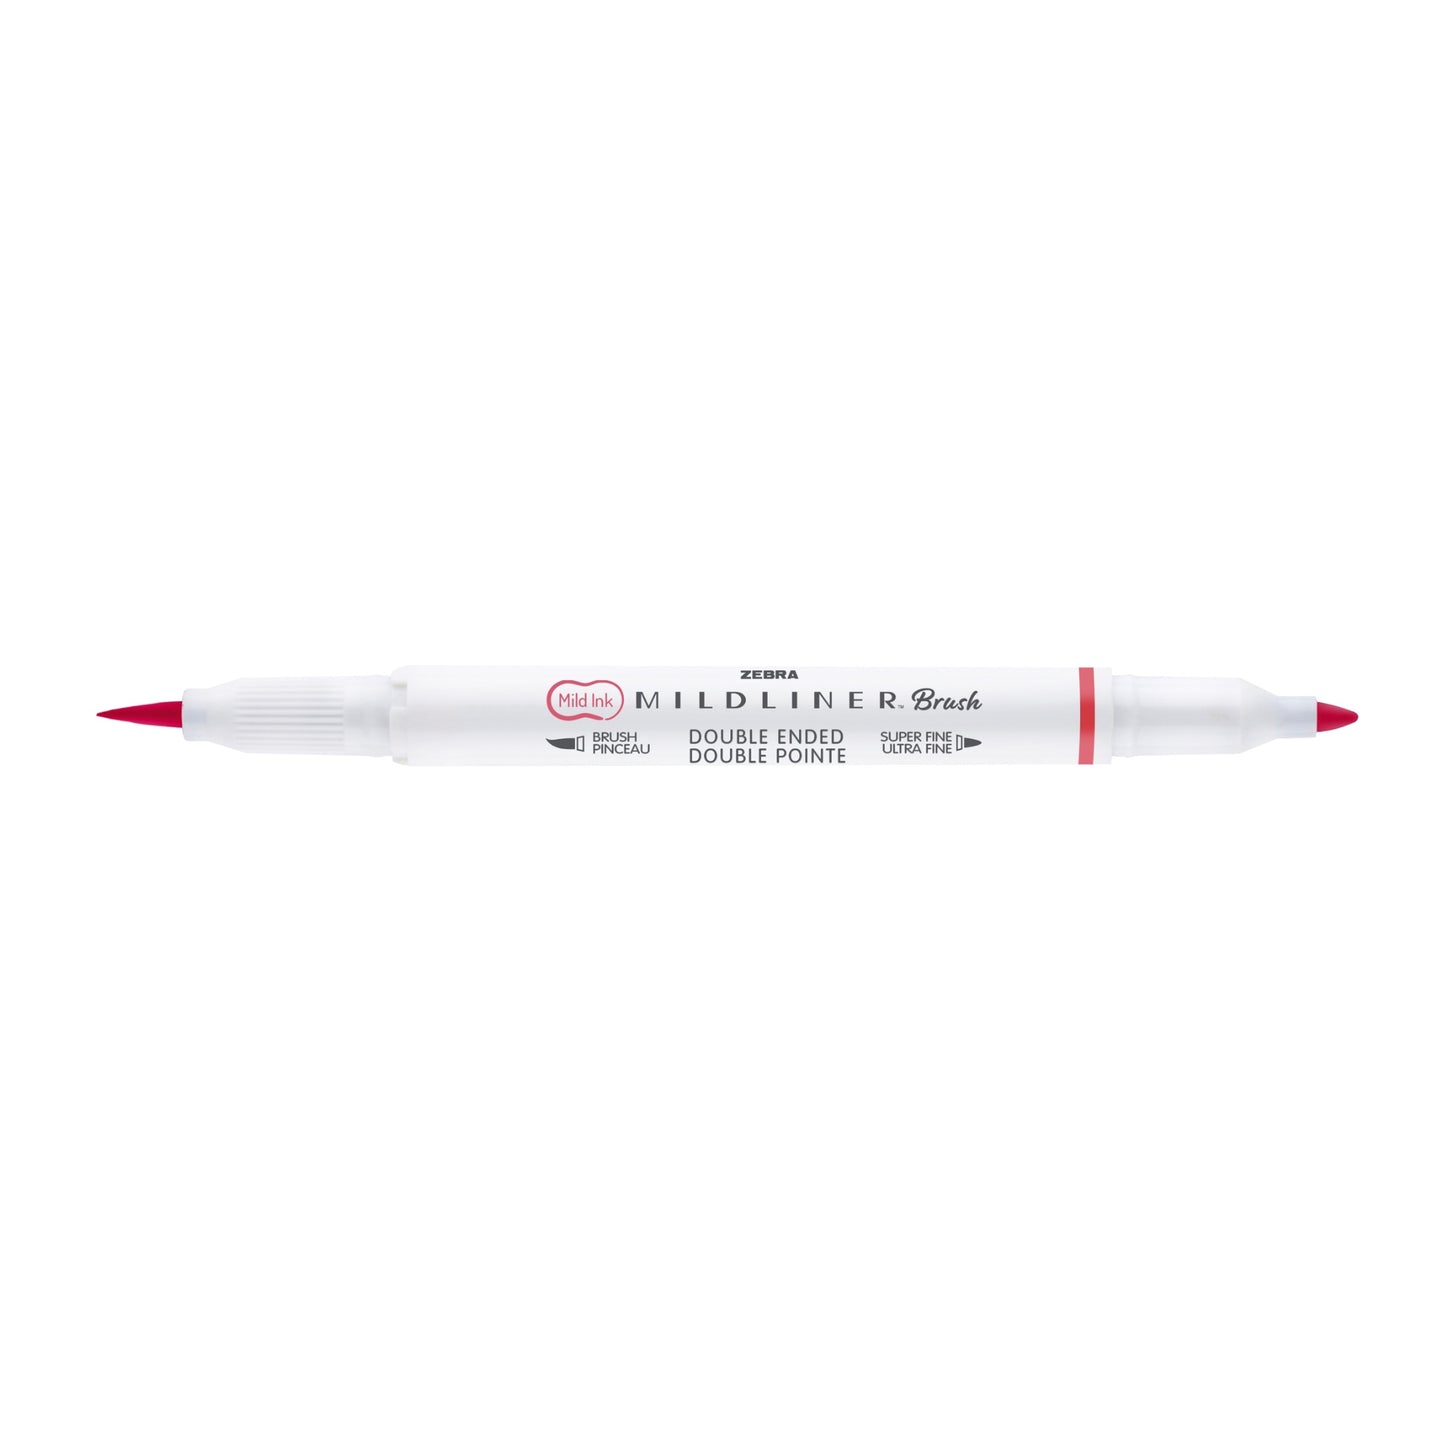 Mildliner - Dual Tip Brush Pen